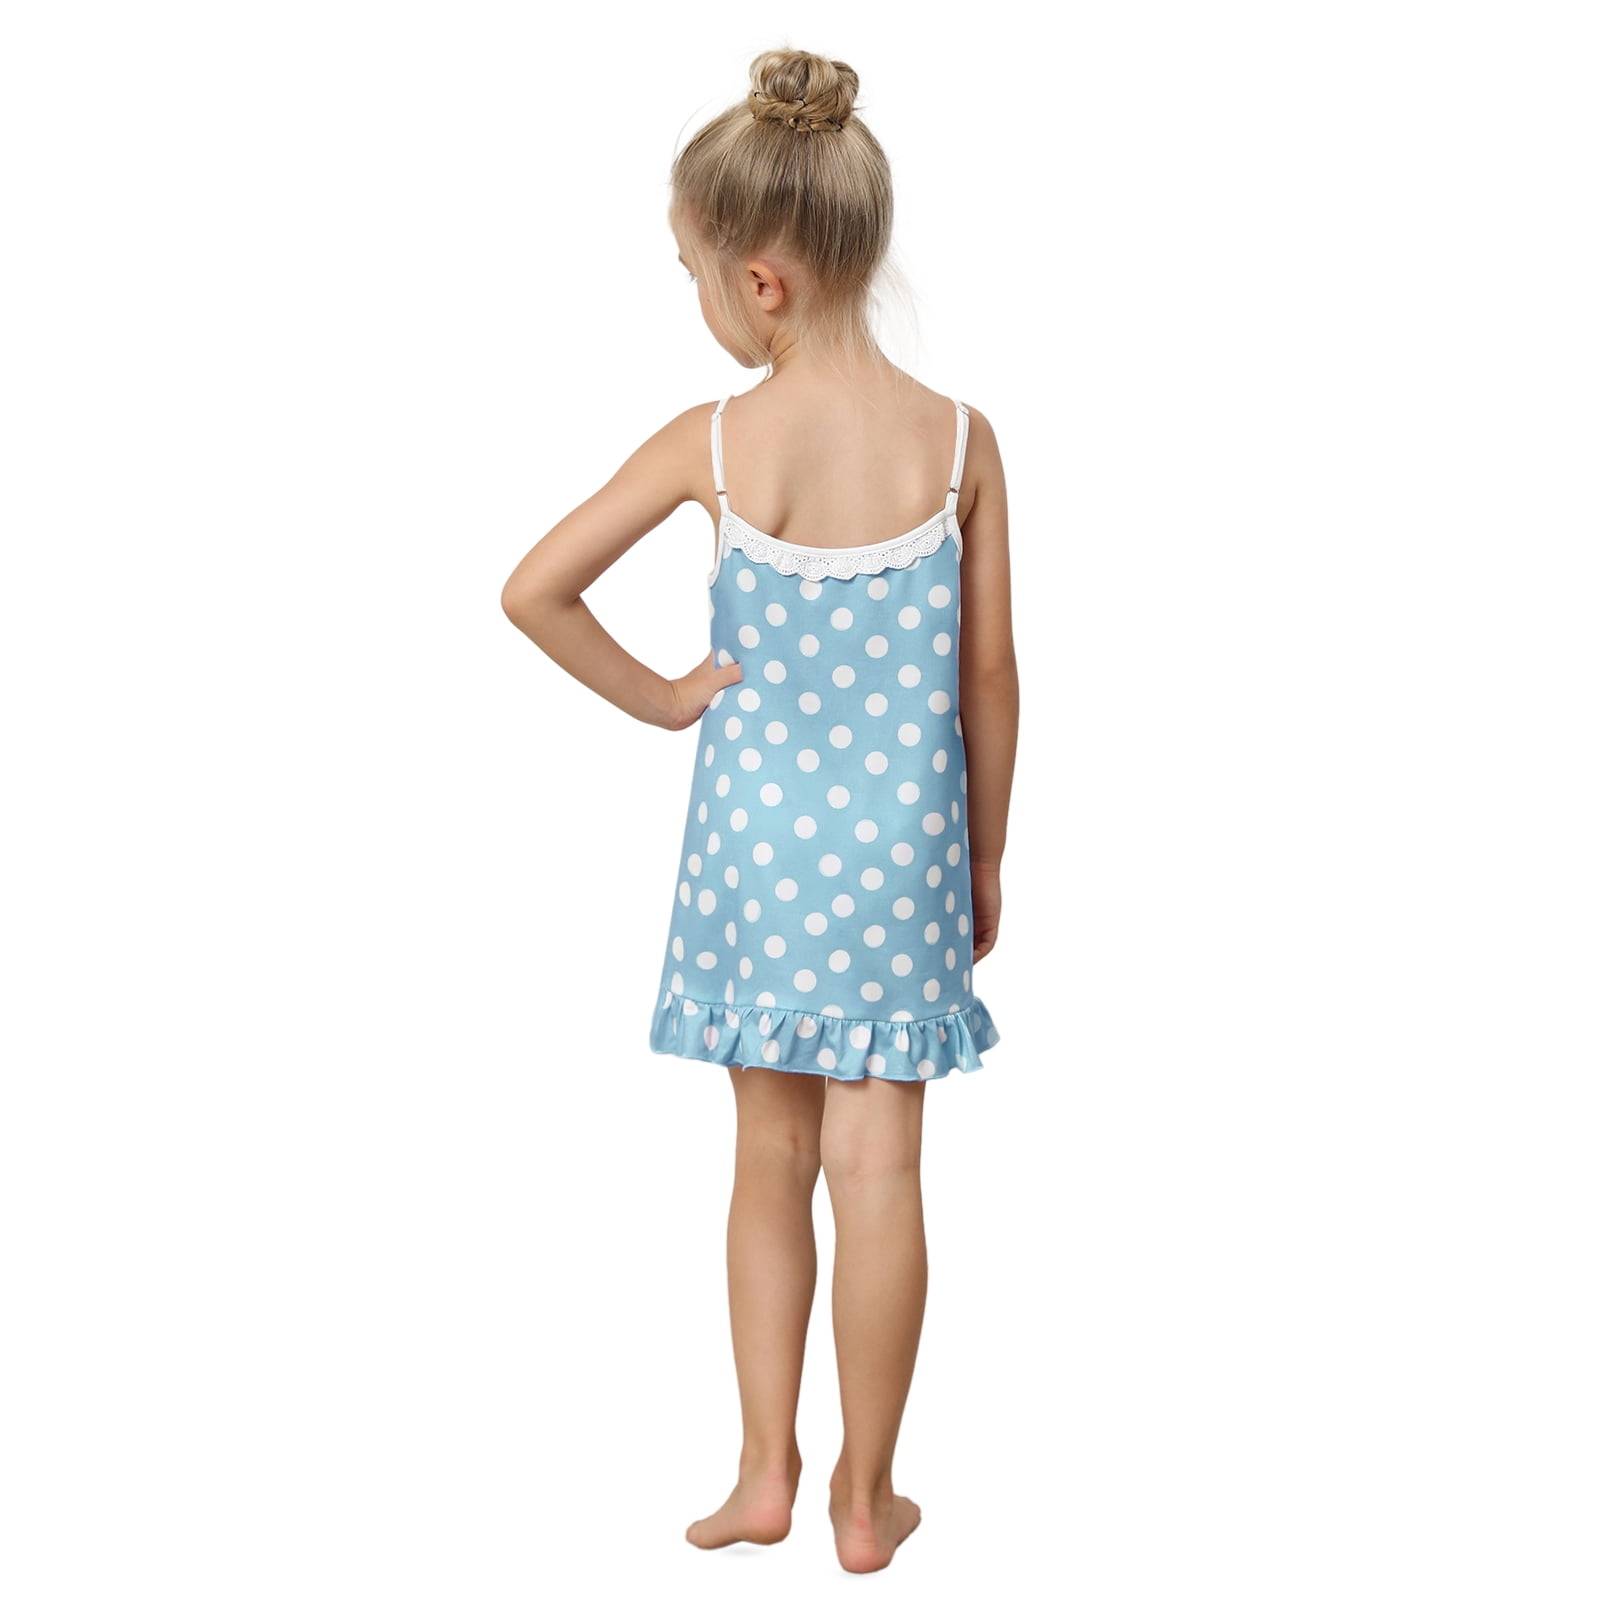 Strap Sleep Dress Kids Girls Cami Polka Dress -12 Soft Years WBQ Dot 6 Nightie Nightgowns Night Spaghetti Summer